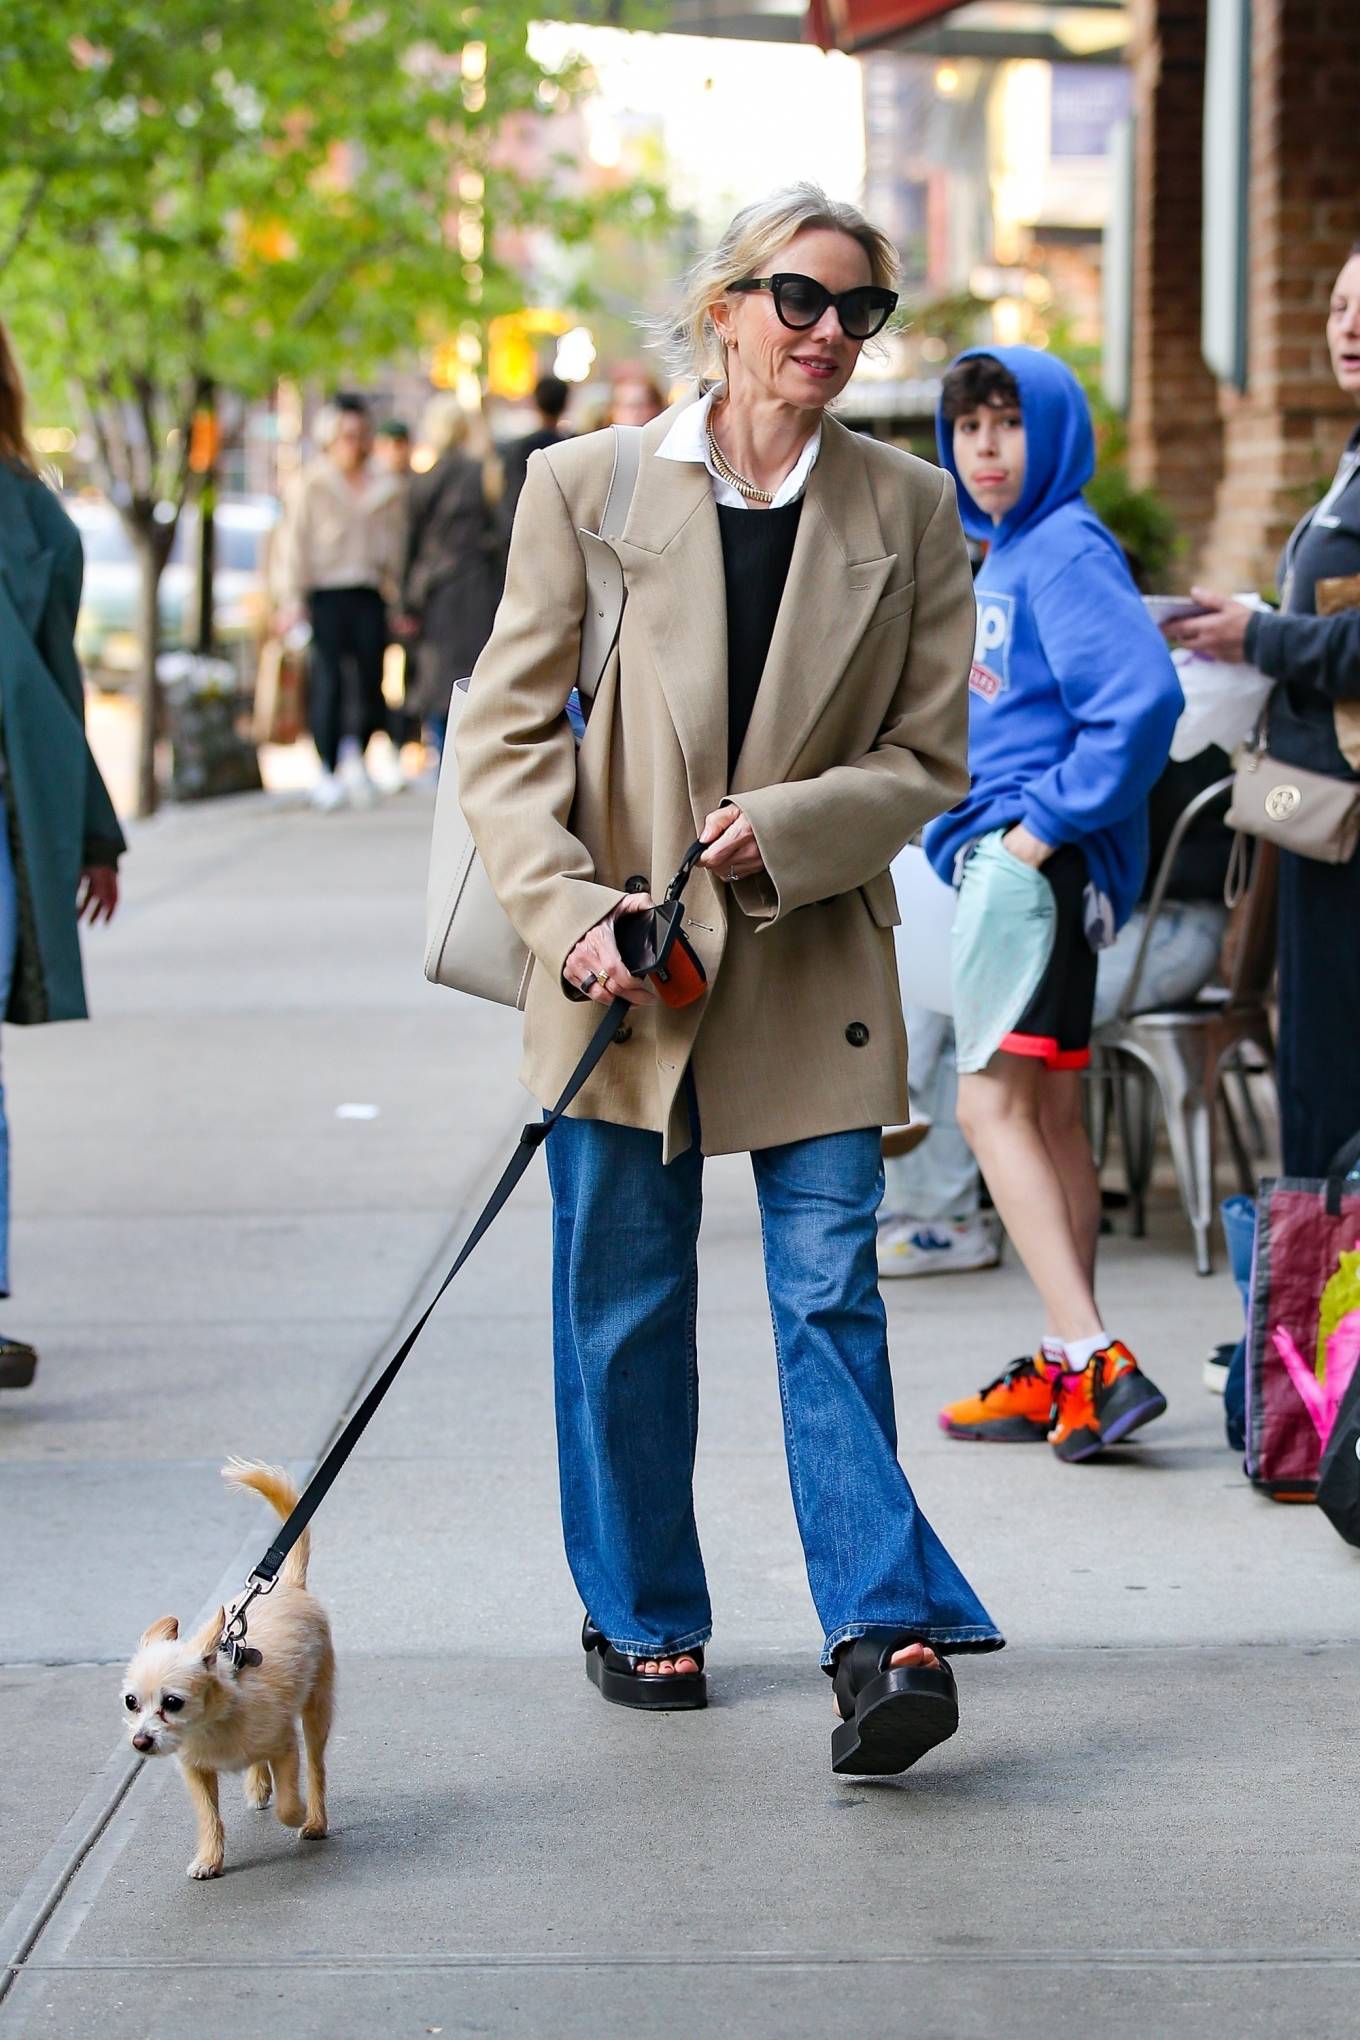 Naomi Watts - Seen walking her dog in New York